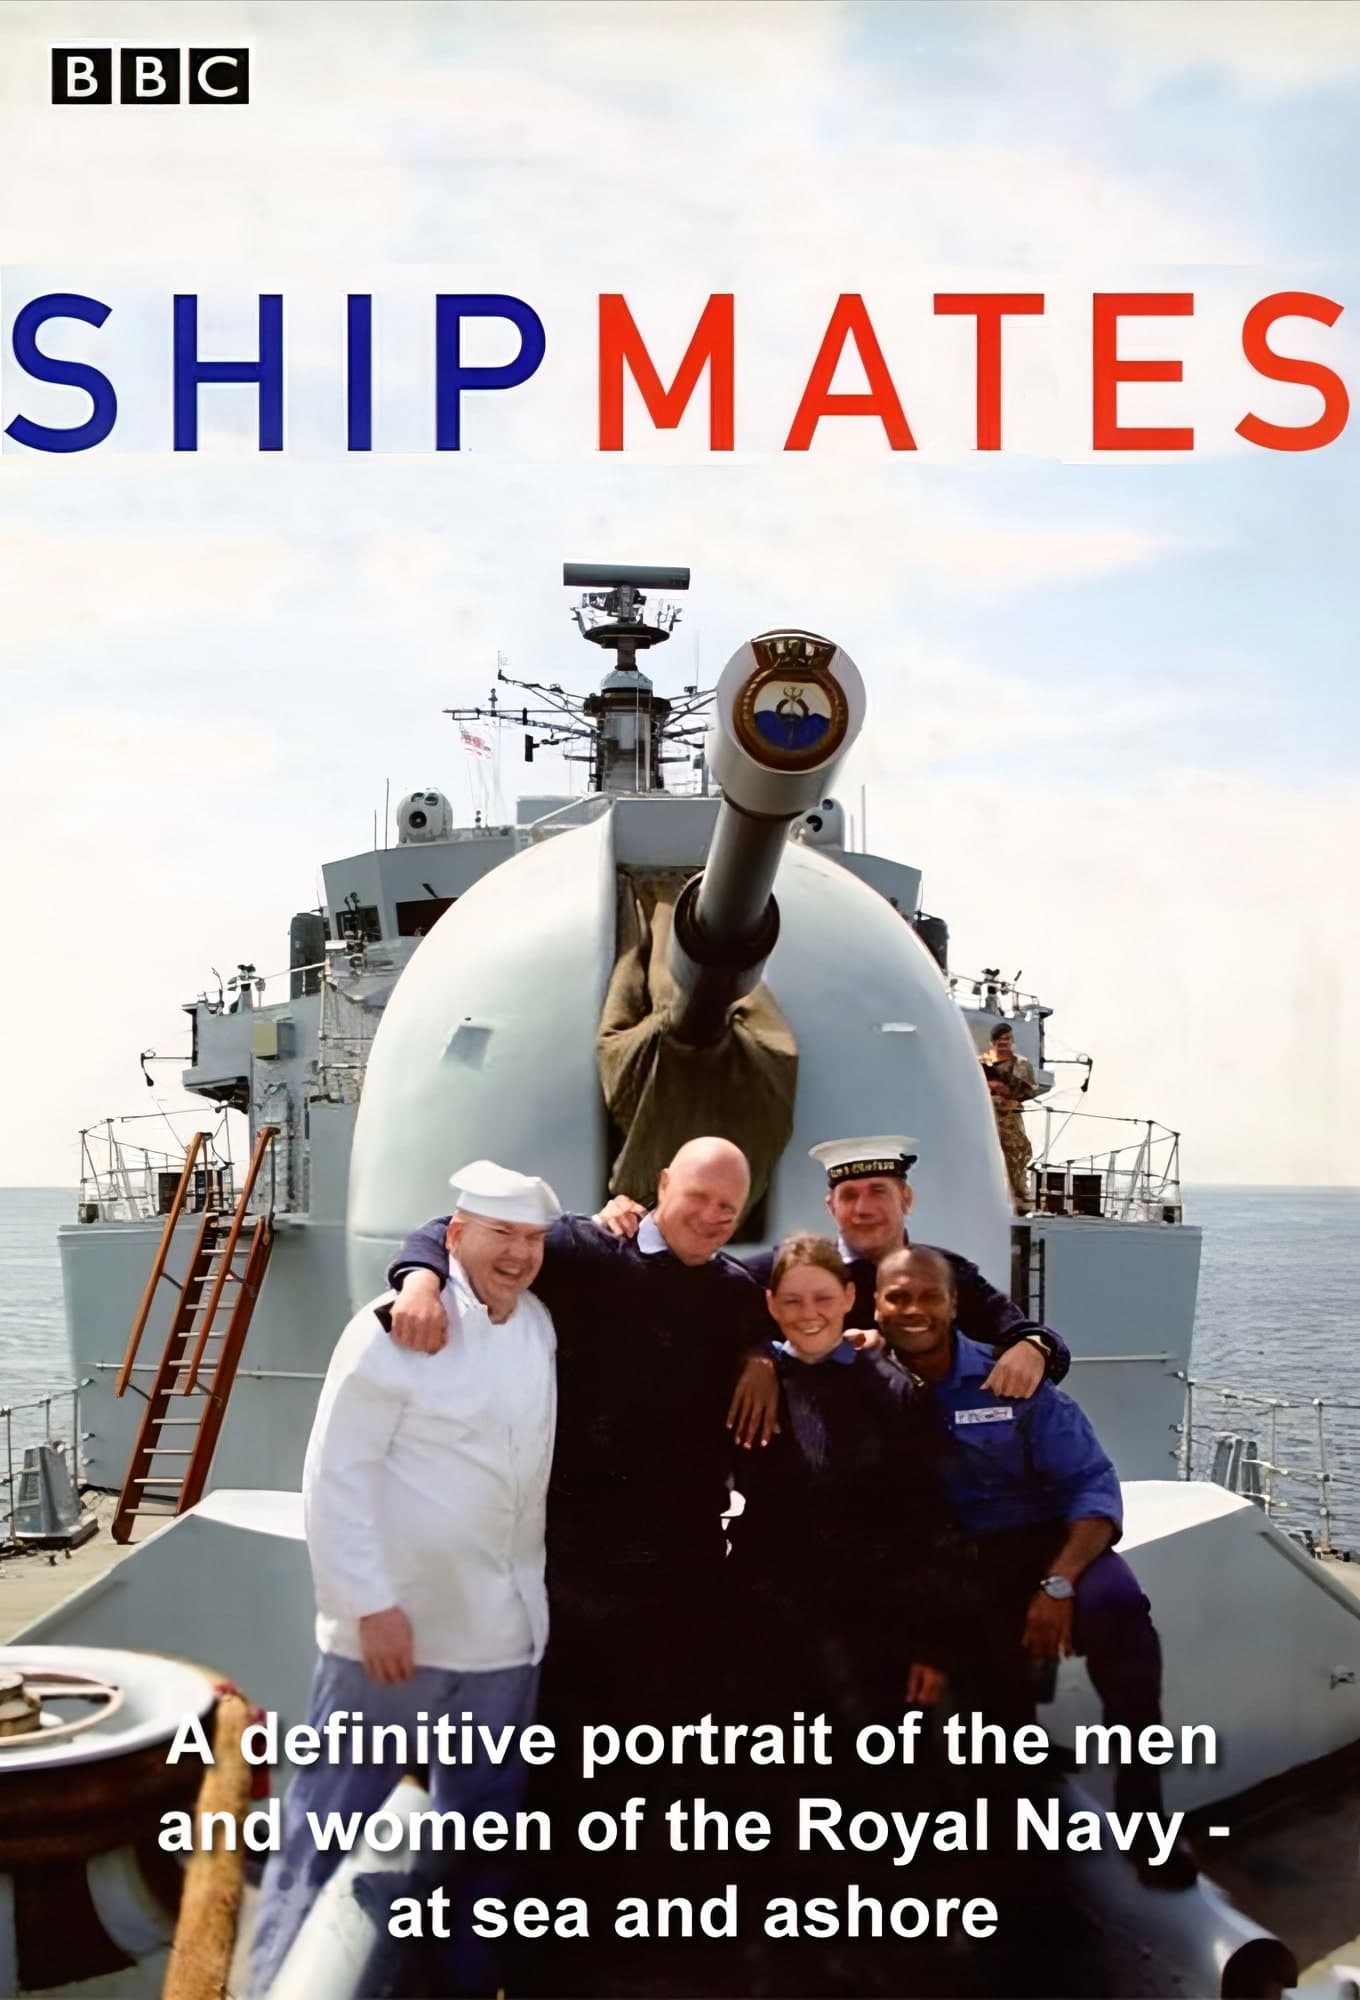 Shipmates